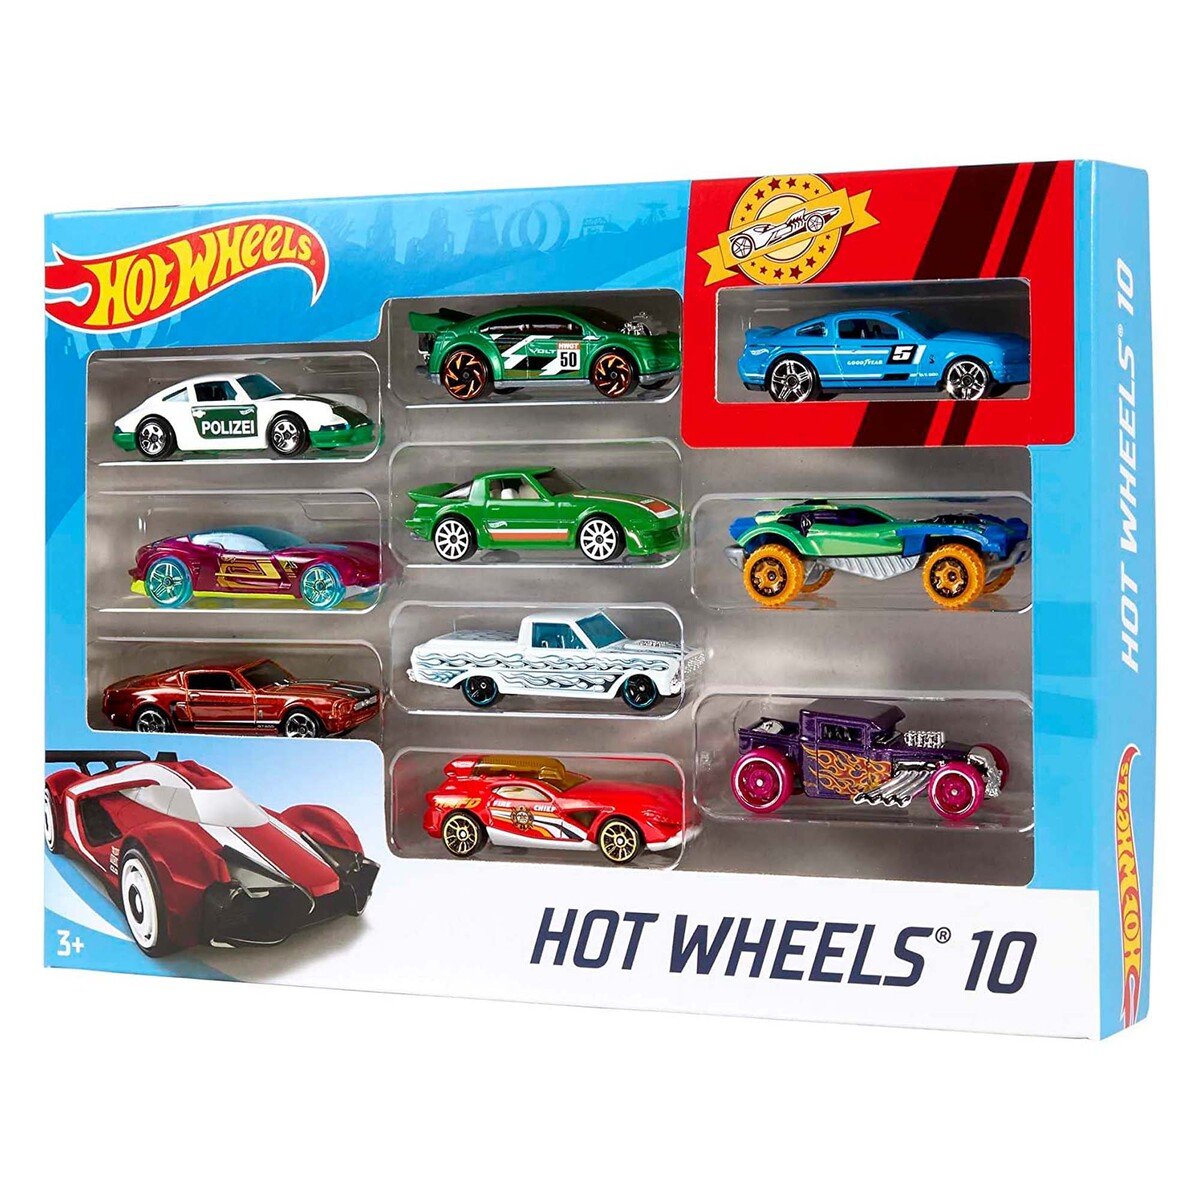 Hot Wheels Basic Cars, 10 Hot Wheels Car in 1 Pack 54886